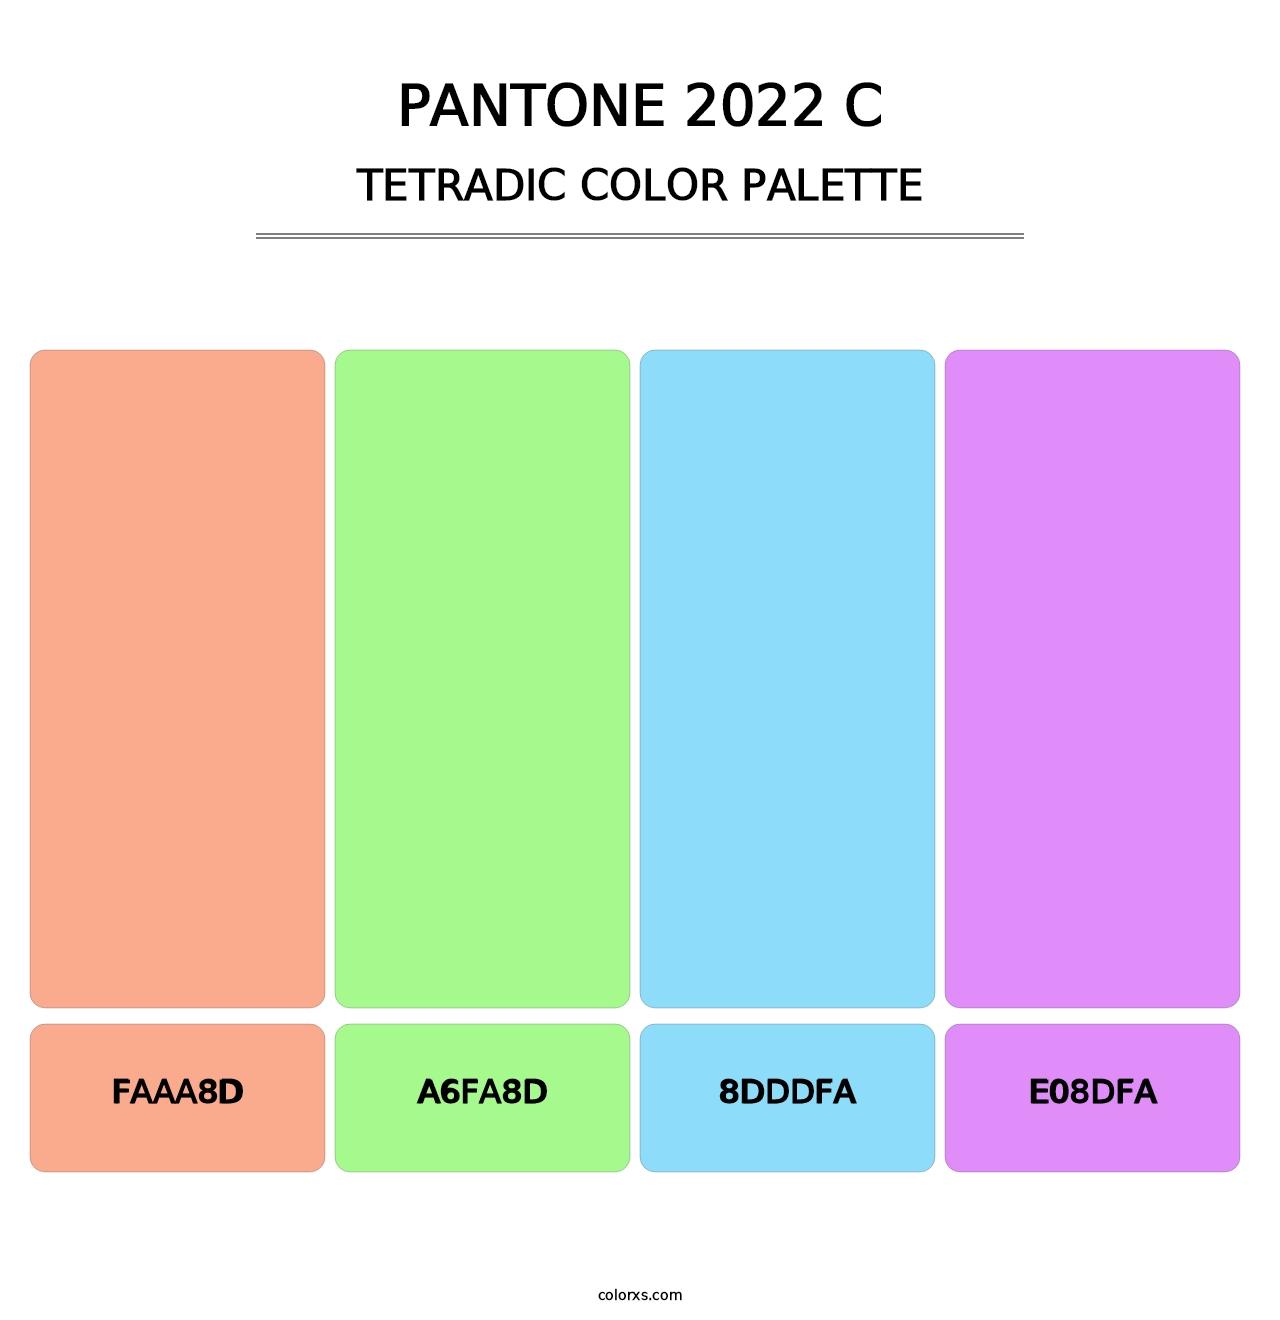 PANTONE 2022 C - Tetradic Color Palette